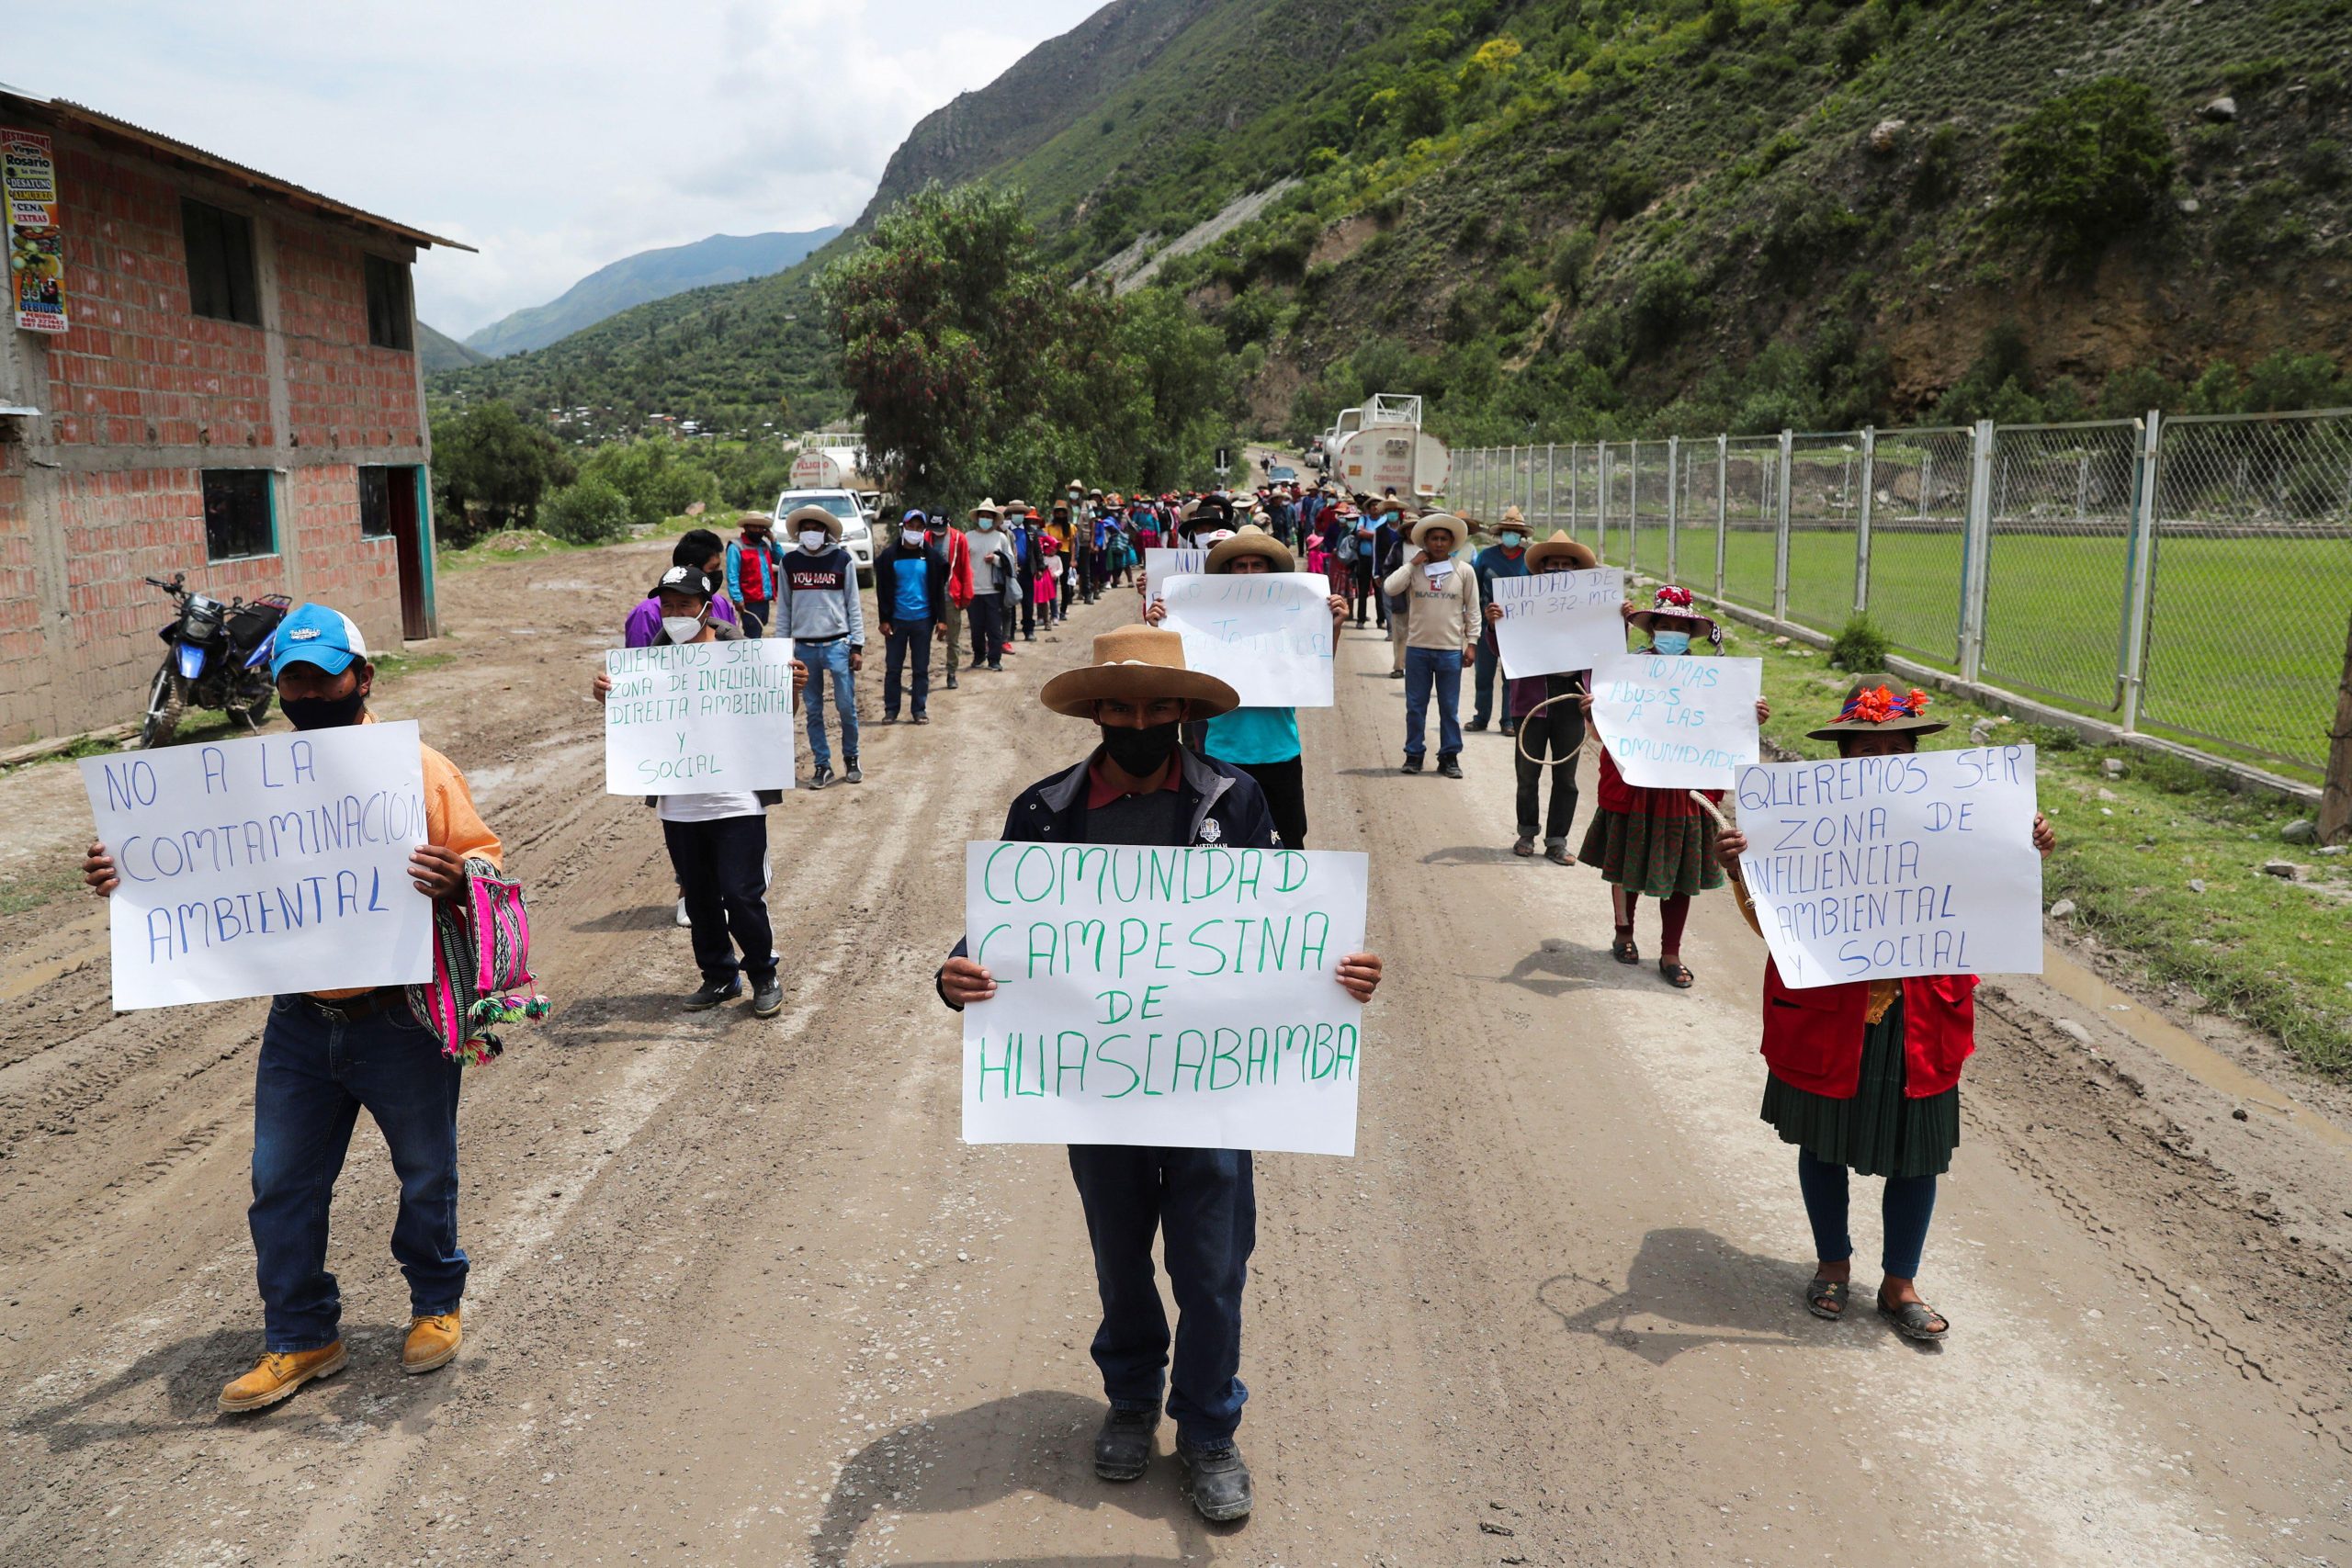 Protest at Las Bambas mine, Peru